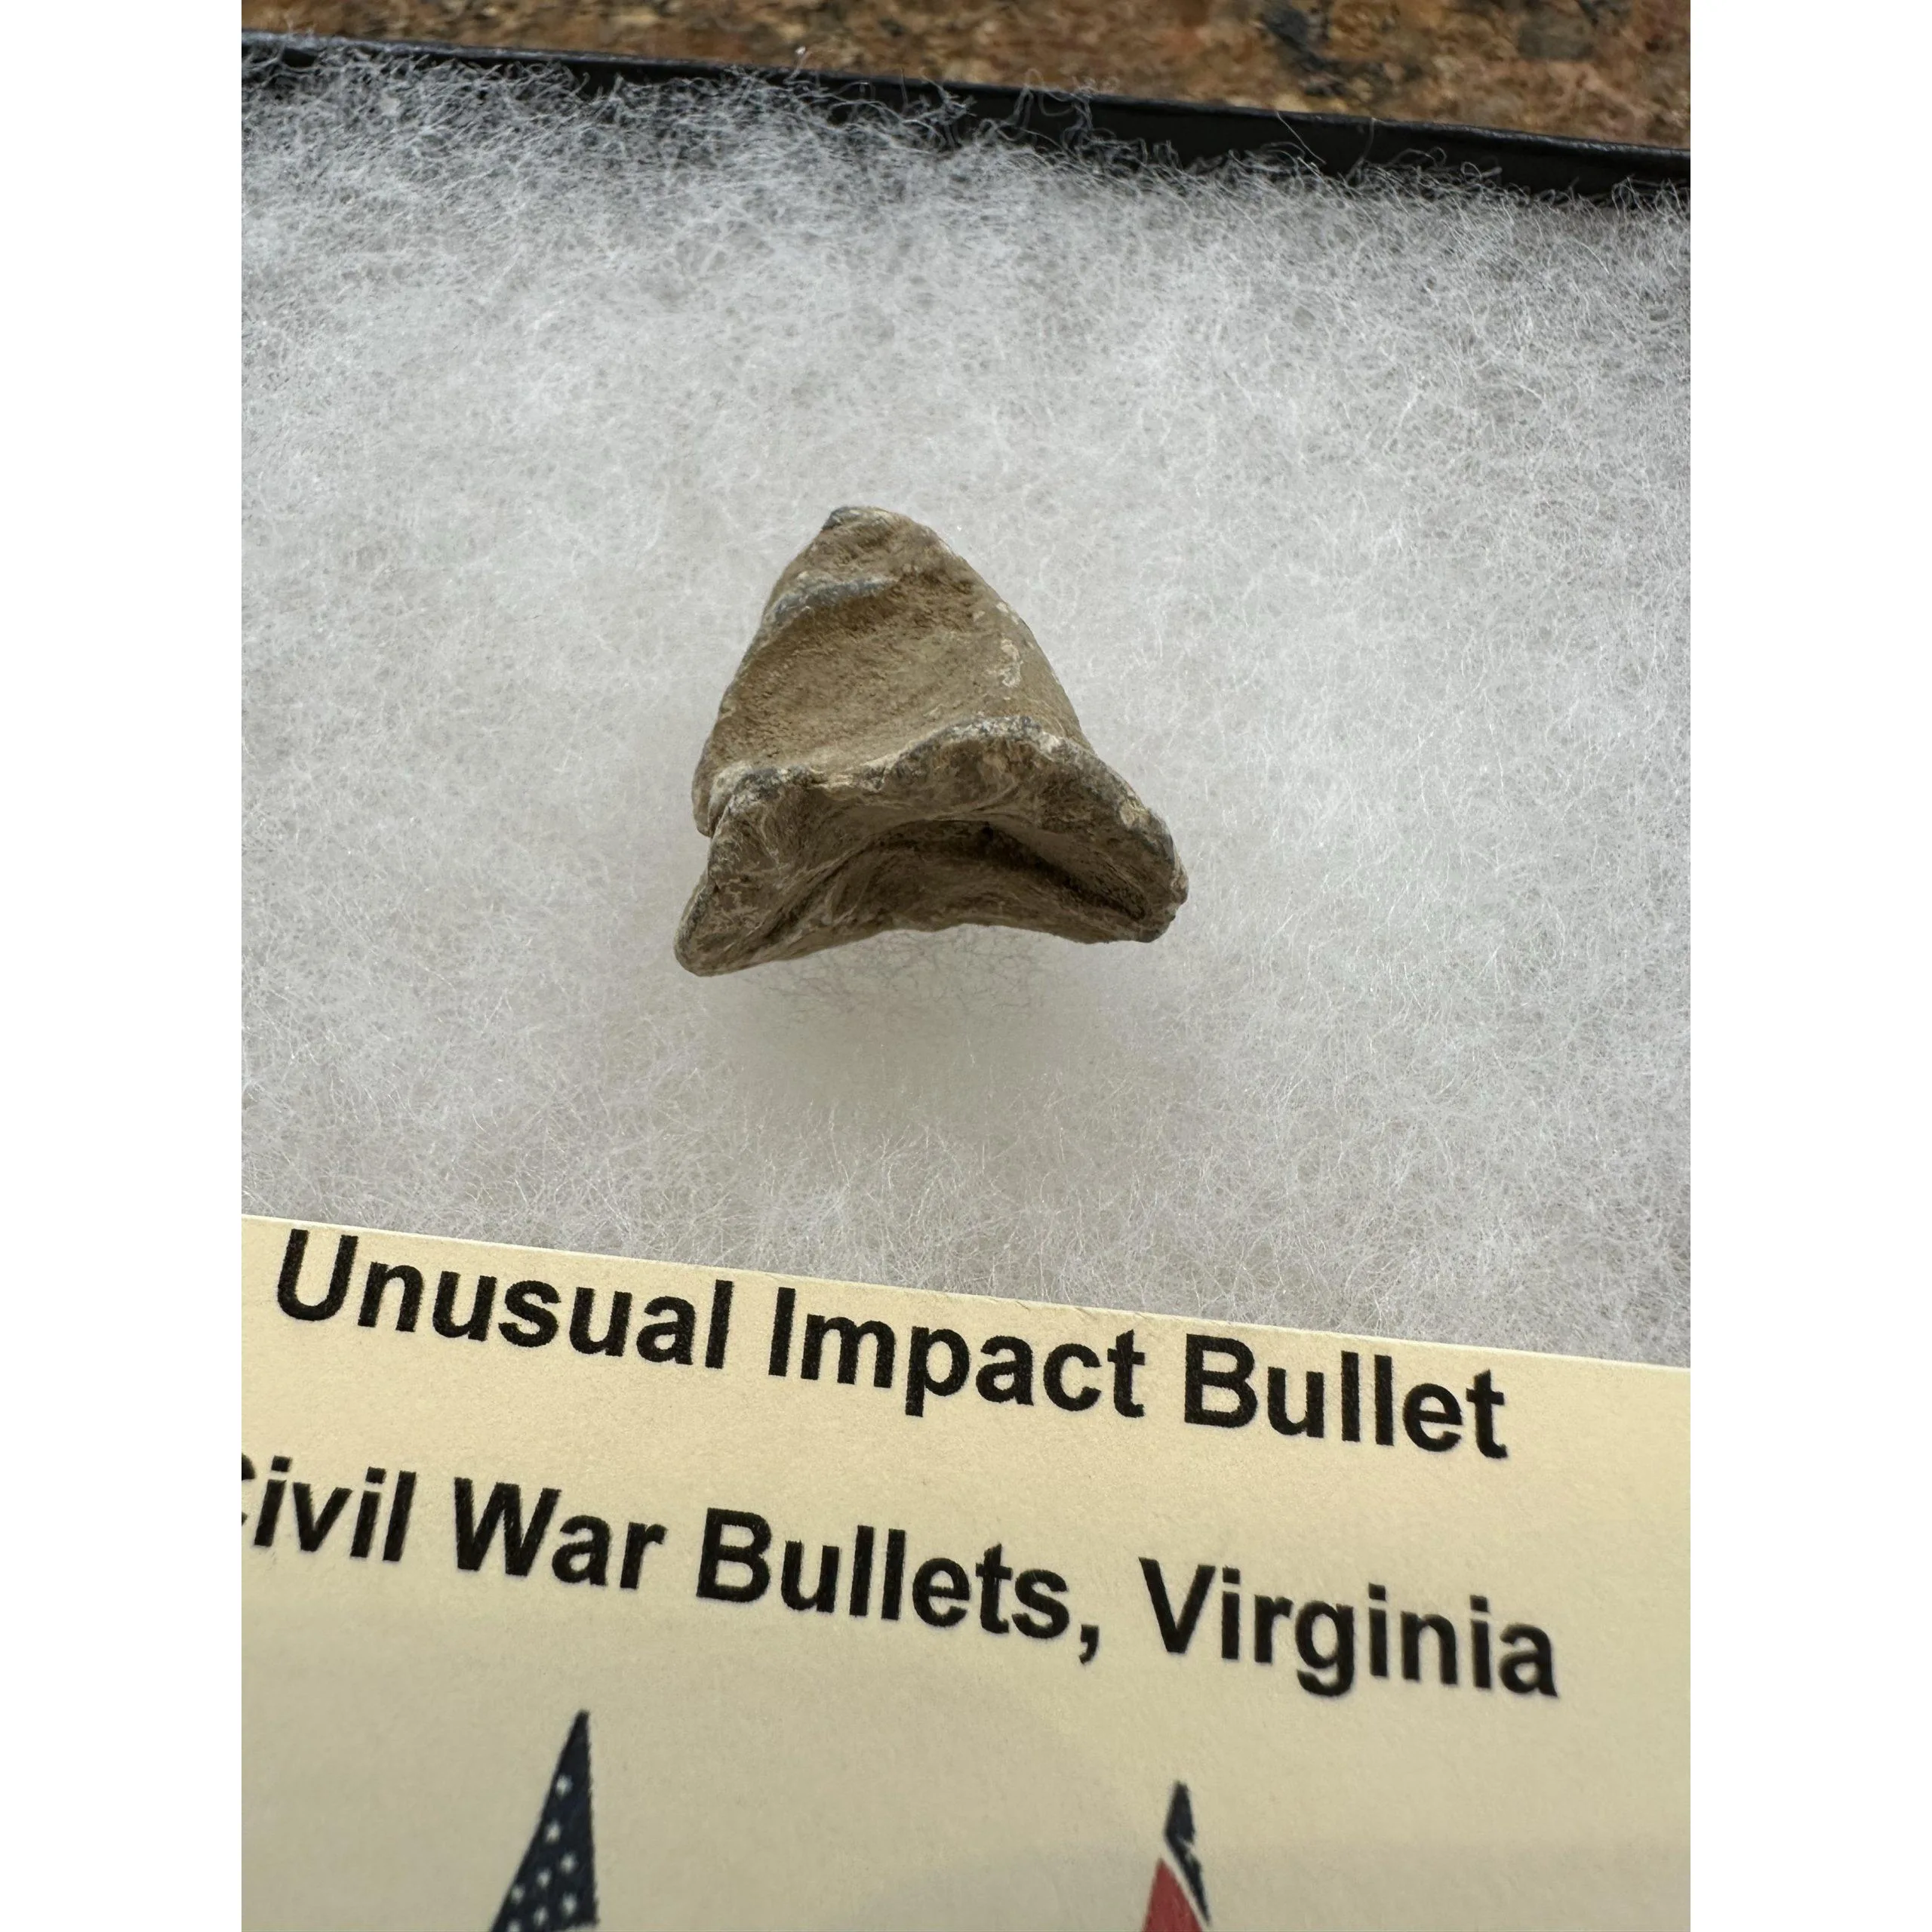 Civil War Bullet – mangled lead bullet, Virginia Prehistoric Online